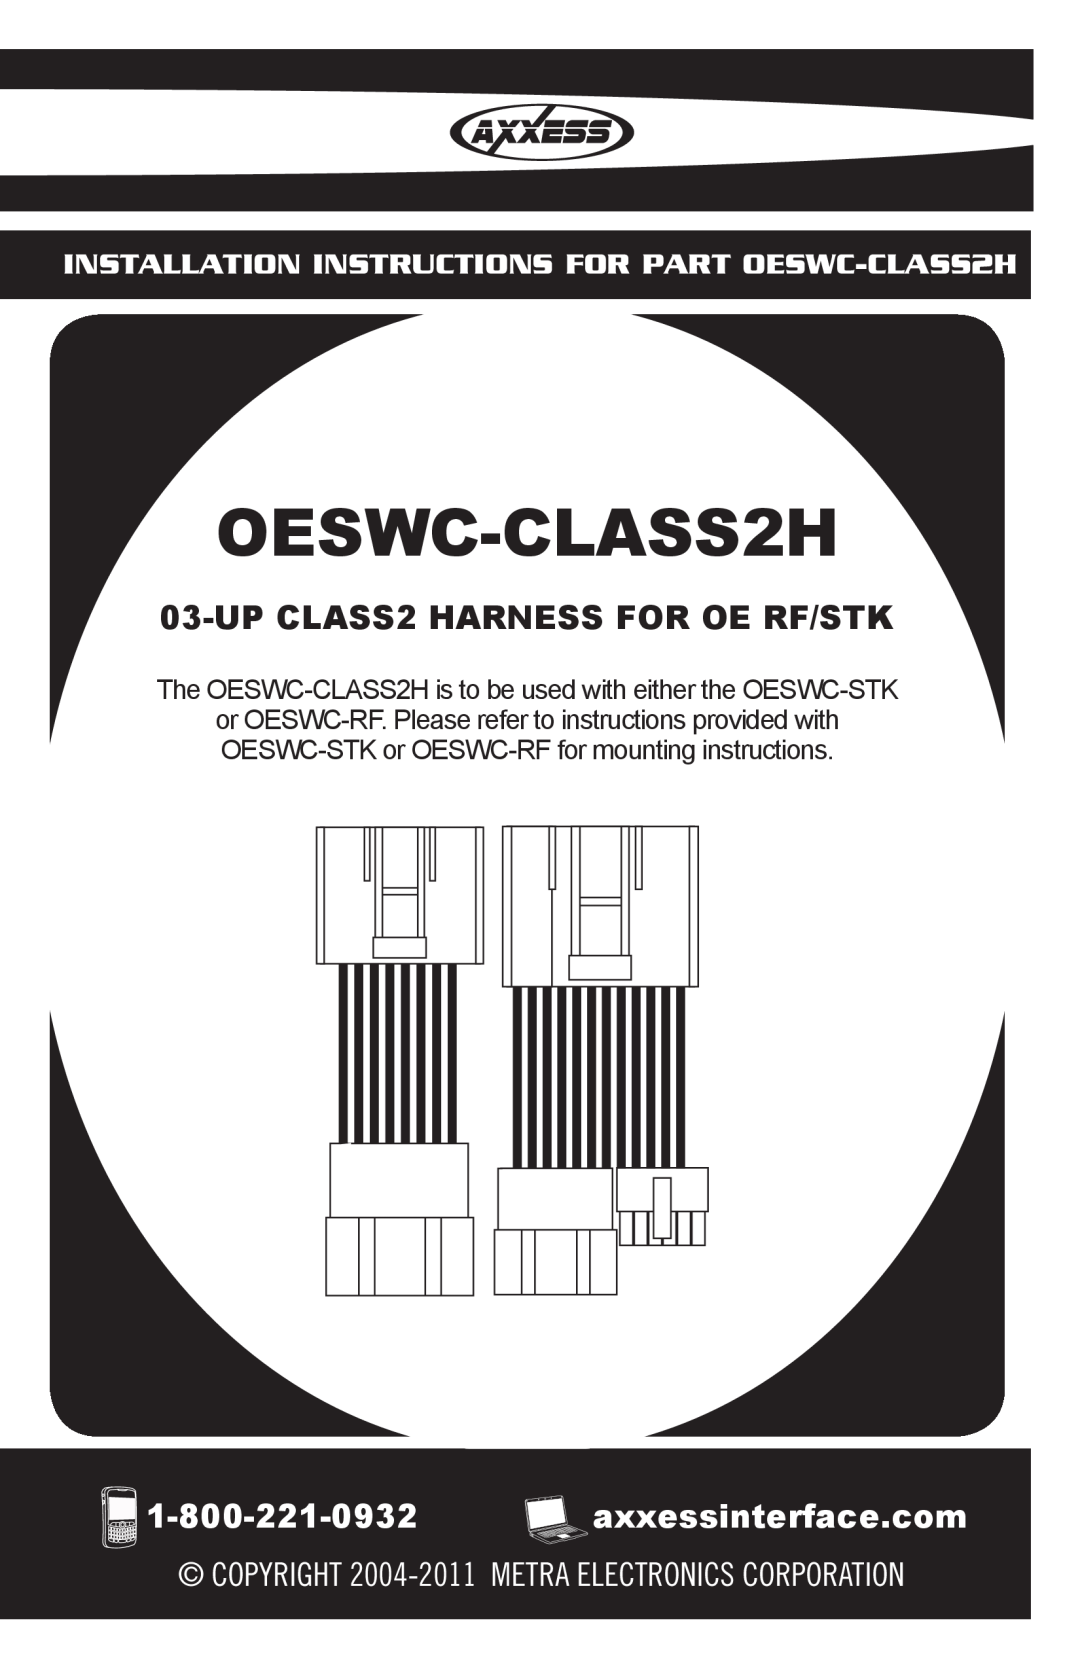 Axxess Interface OESWC-CLASS2H installation instructions UPCLASS2 HARNESS FOR OE RF/STK 